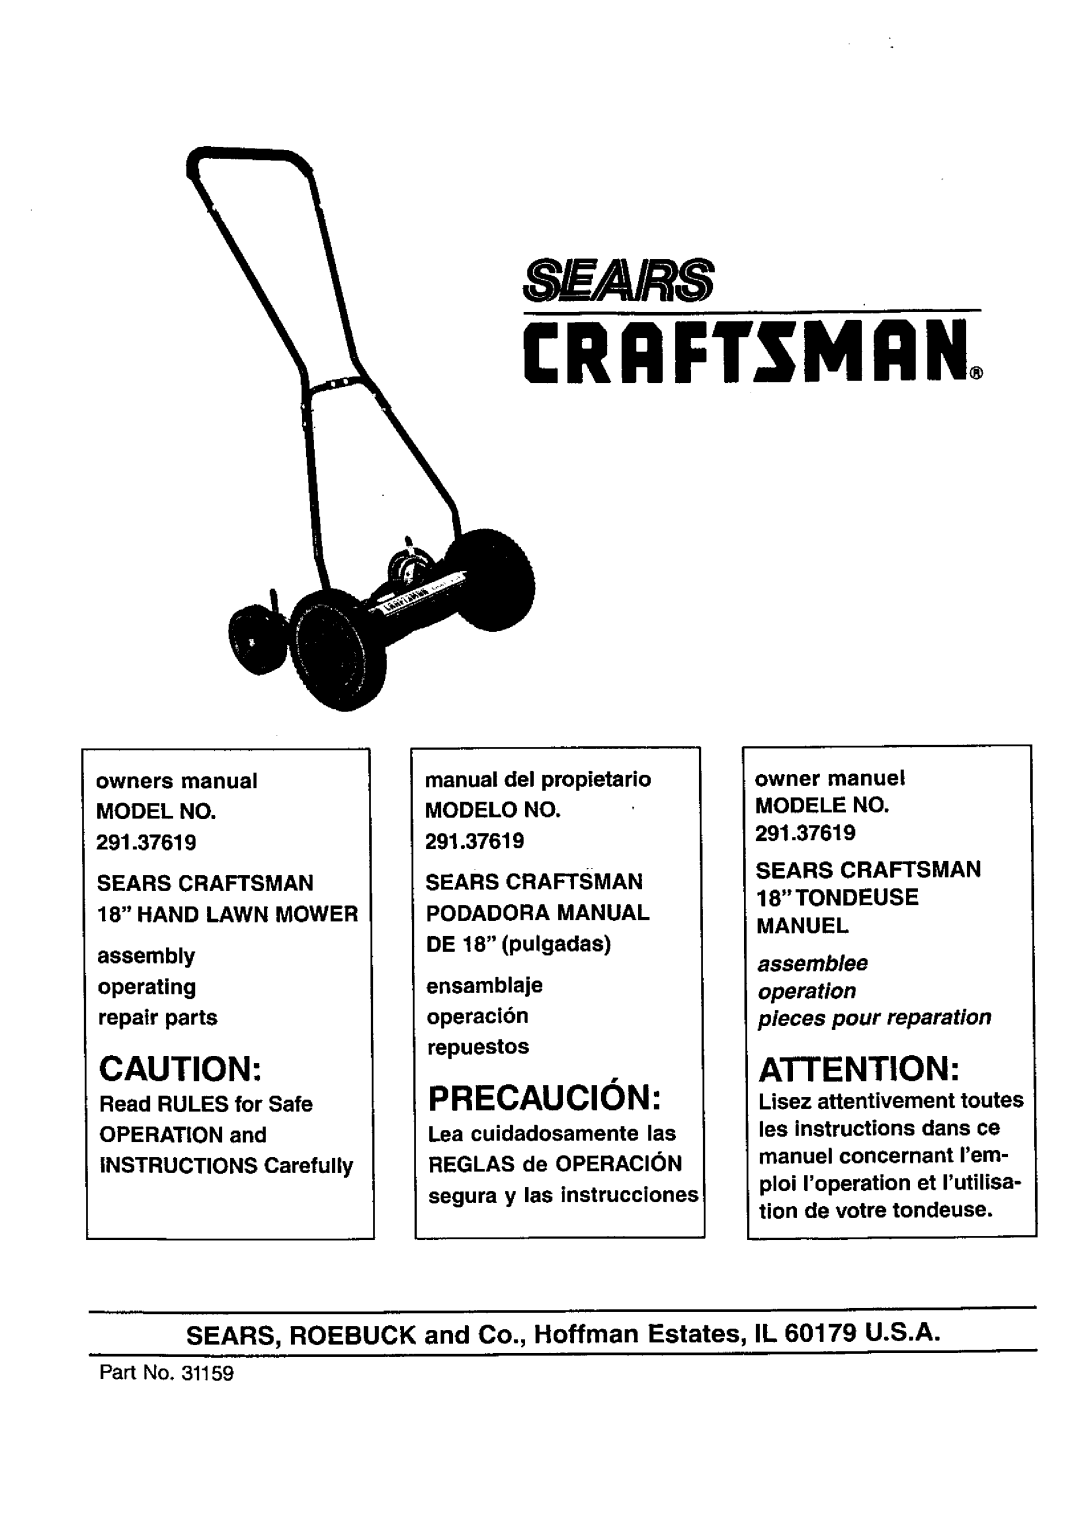 Craftsman 291.37619 owner manual Sears Craftsman, 18TONDEUSE, Crrftsmrn, P A/R8, Precaucion, assemblee, operation 